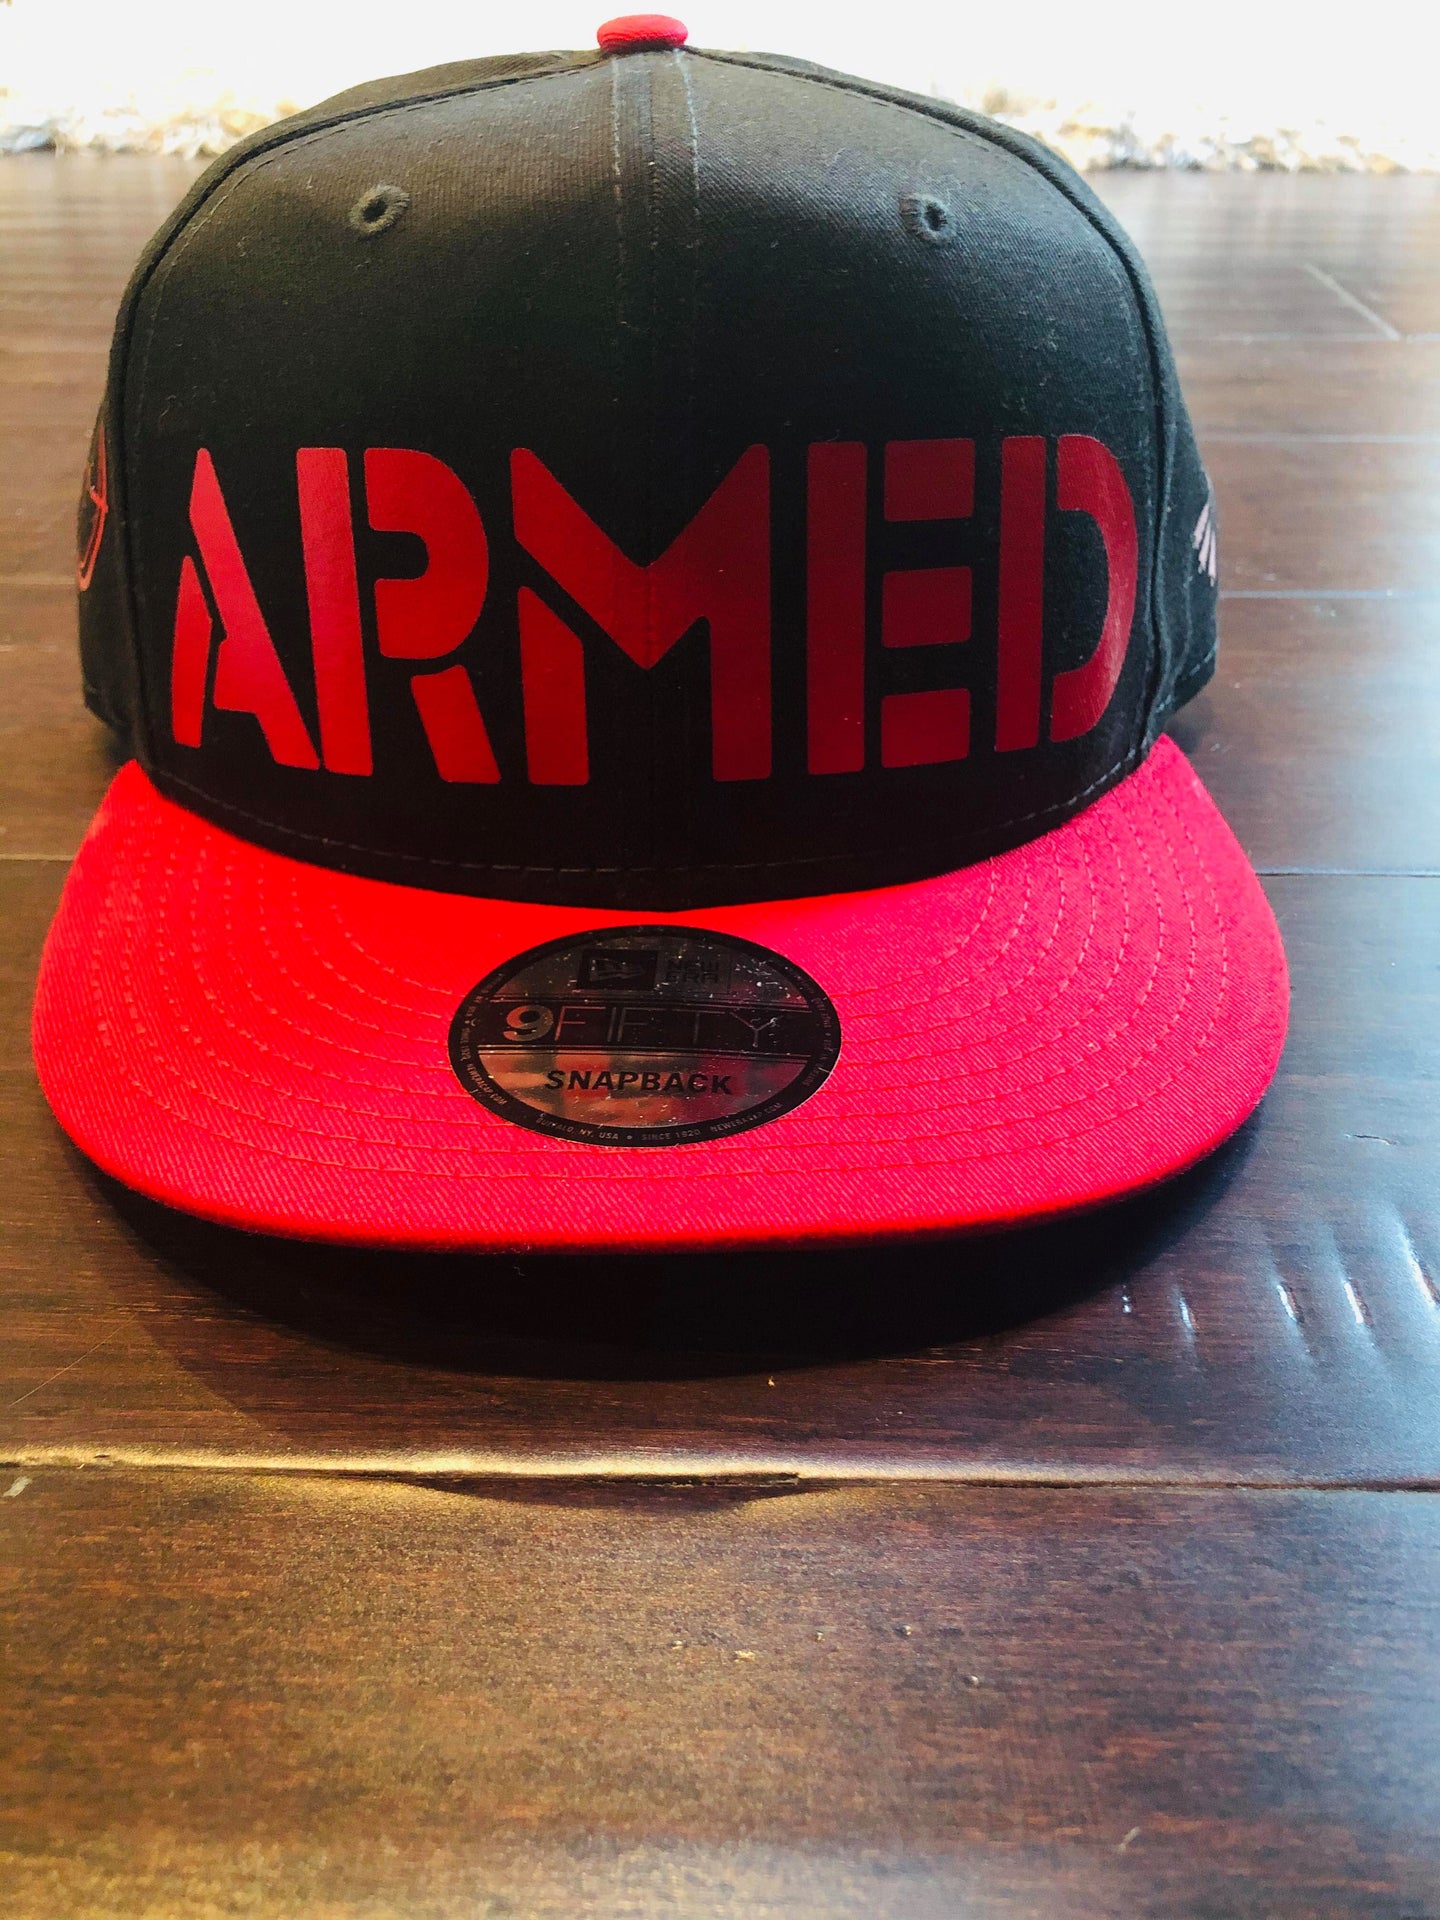 BLACK/RED ARMED SNAPBACK HAT